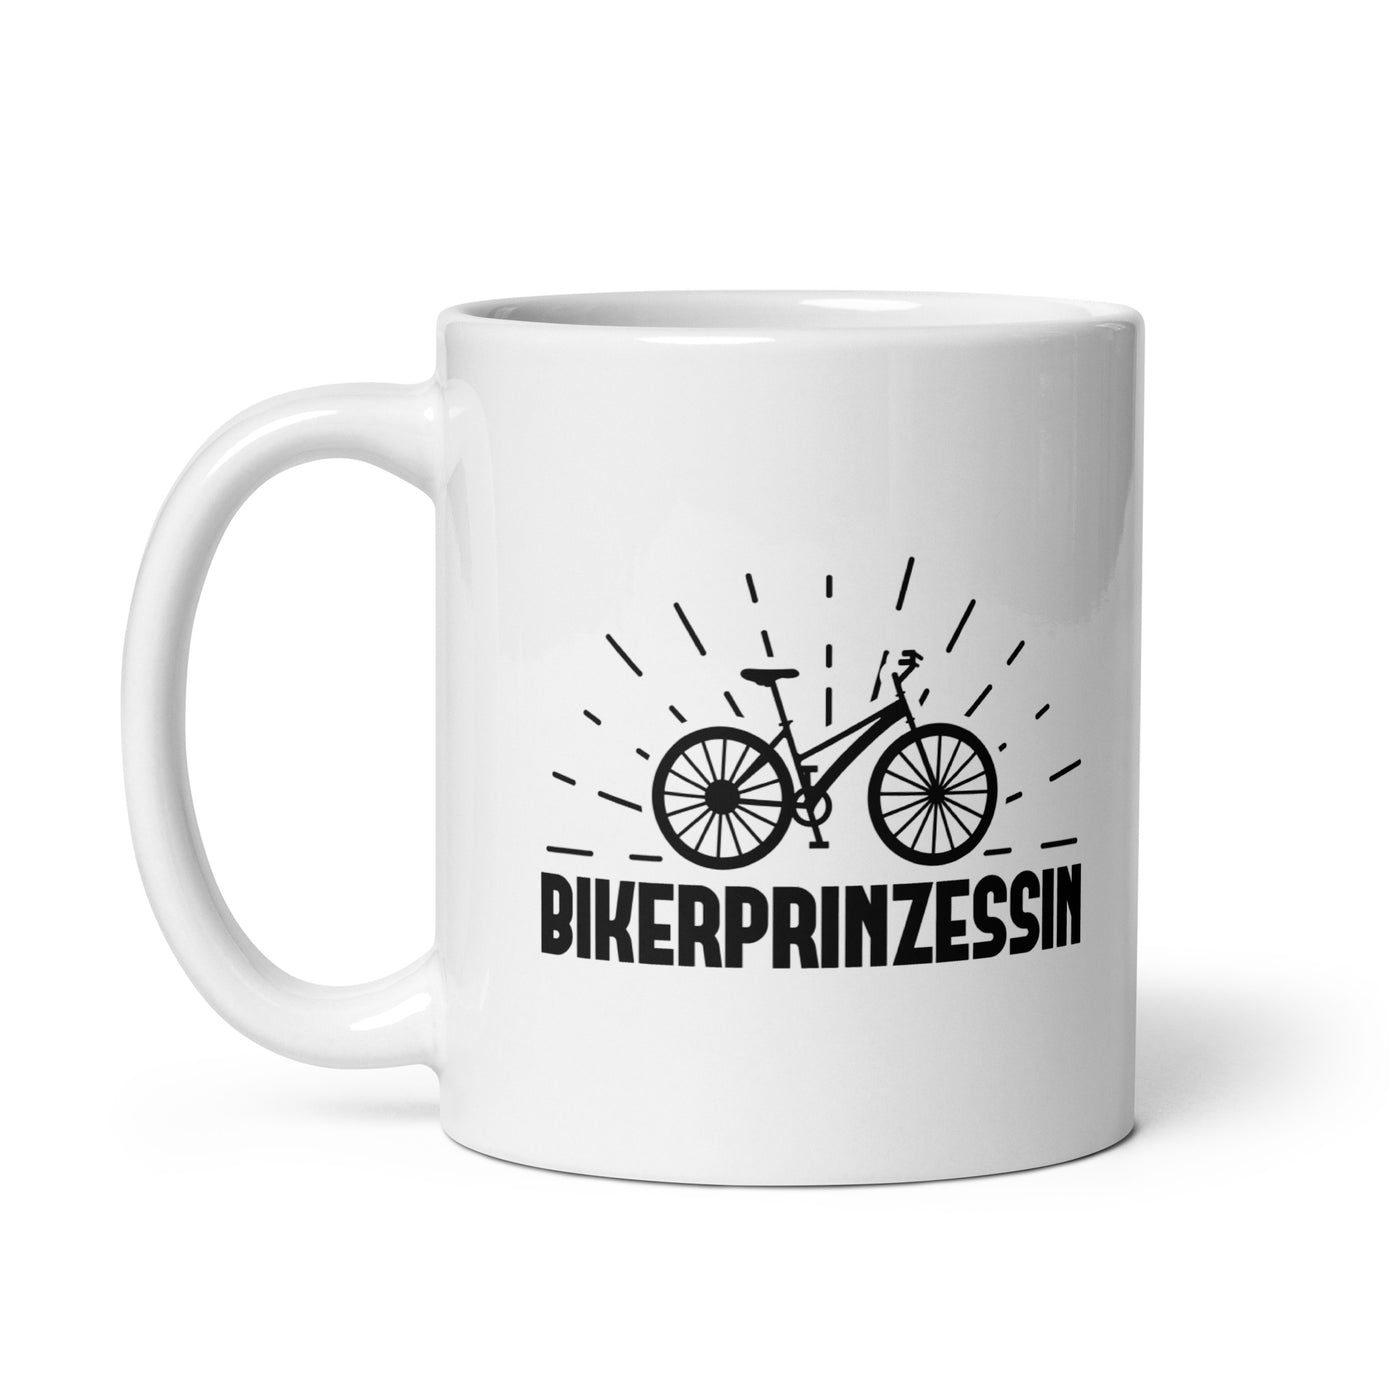 Bikerprinzessin - Tasse fahrrad 11oz